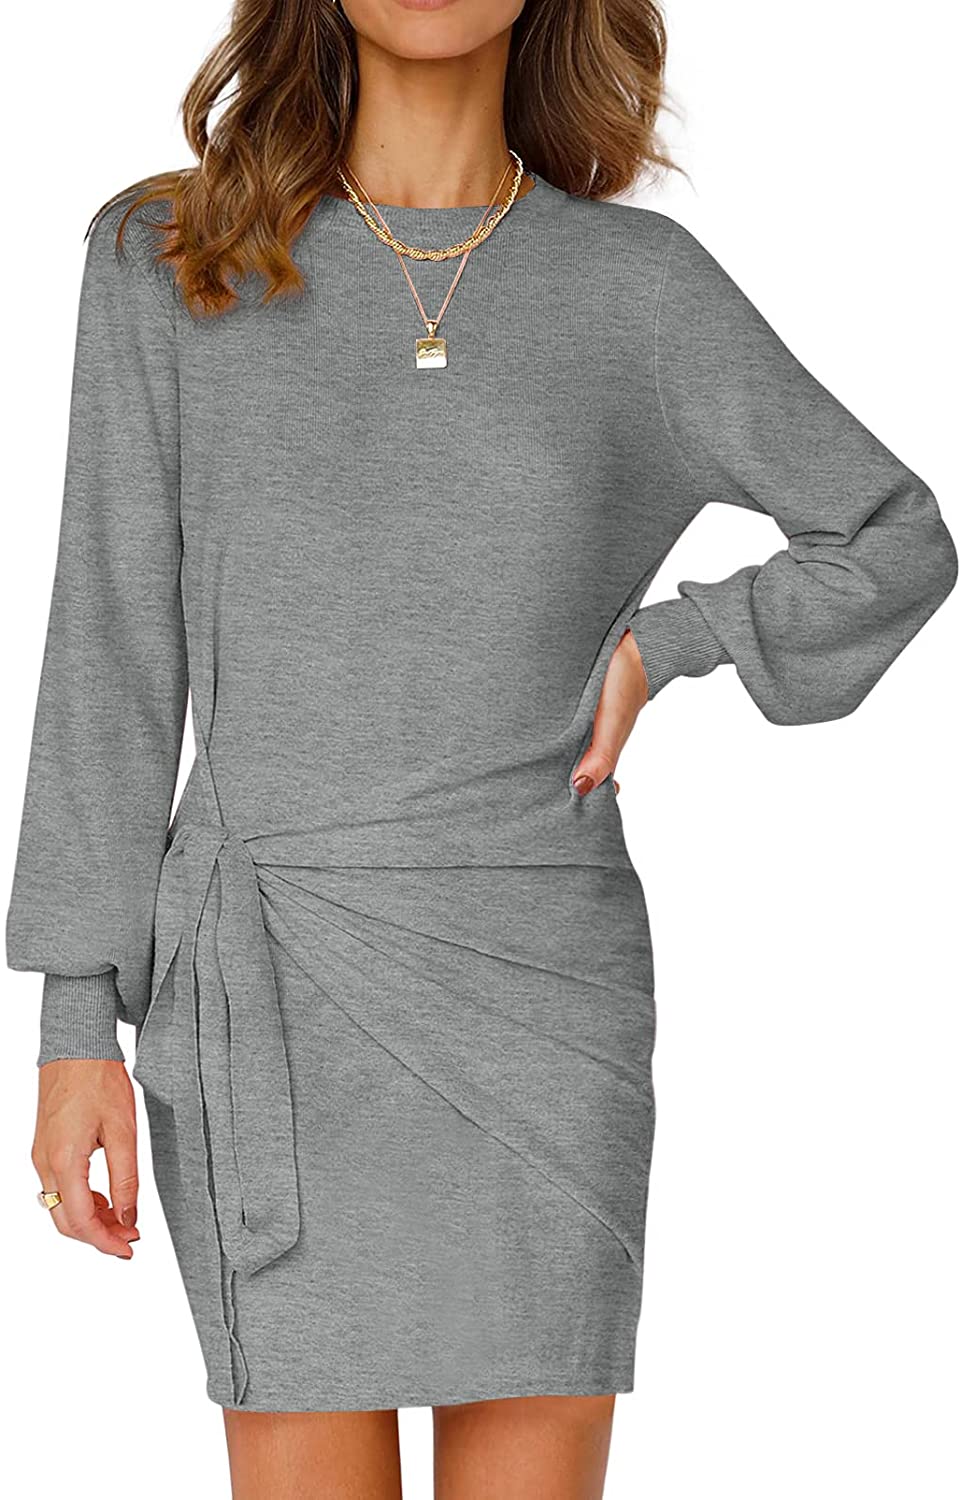 MEROKEETY Women's Puff Sleeve Tie Waist Sweater Dress Solid Color Soft  Knitted B | eBay